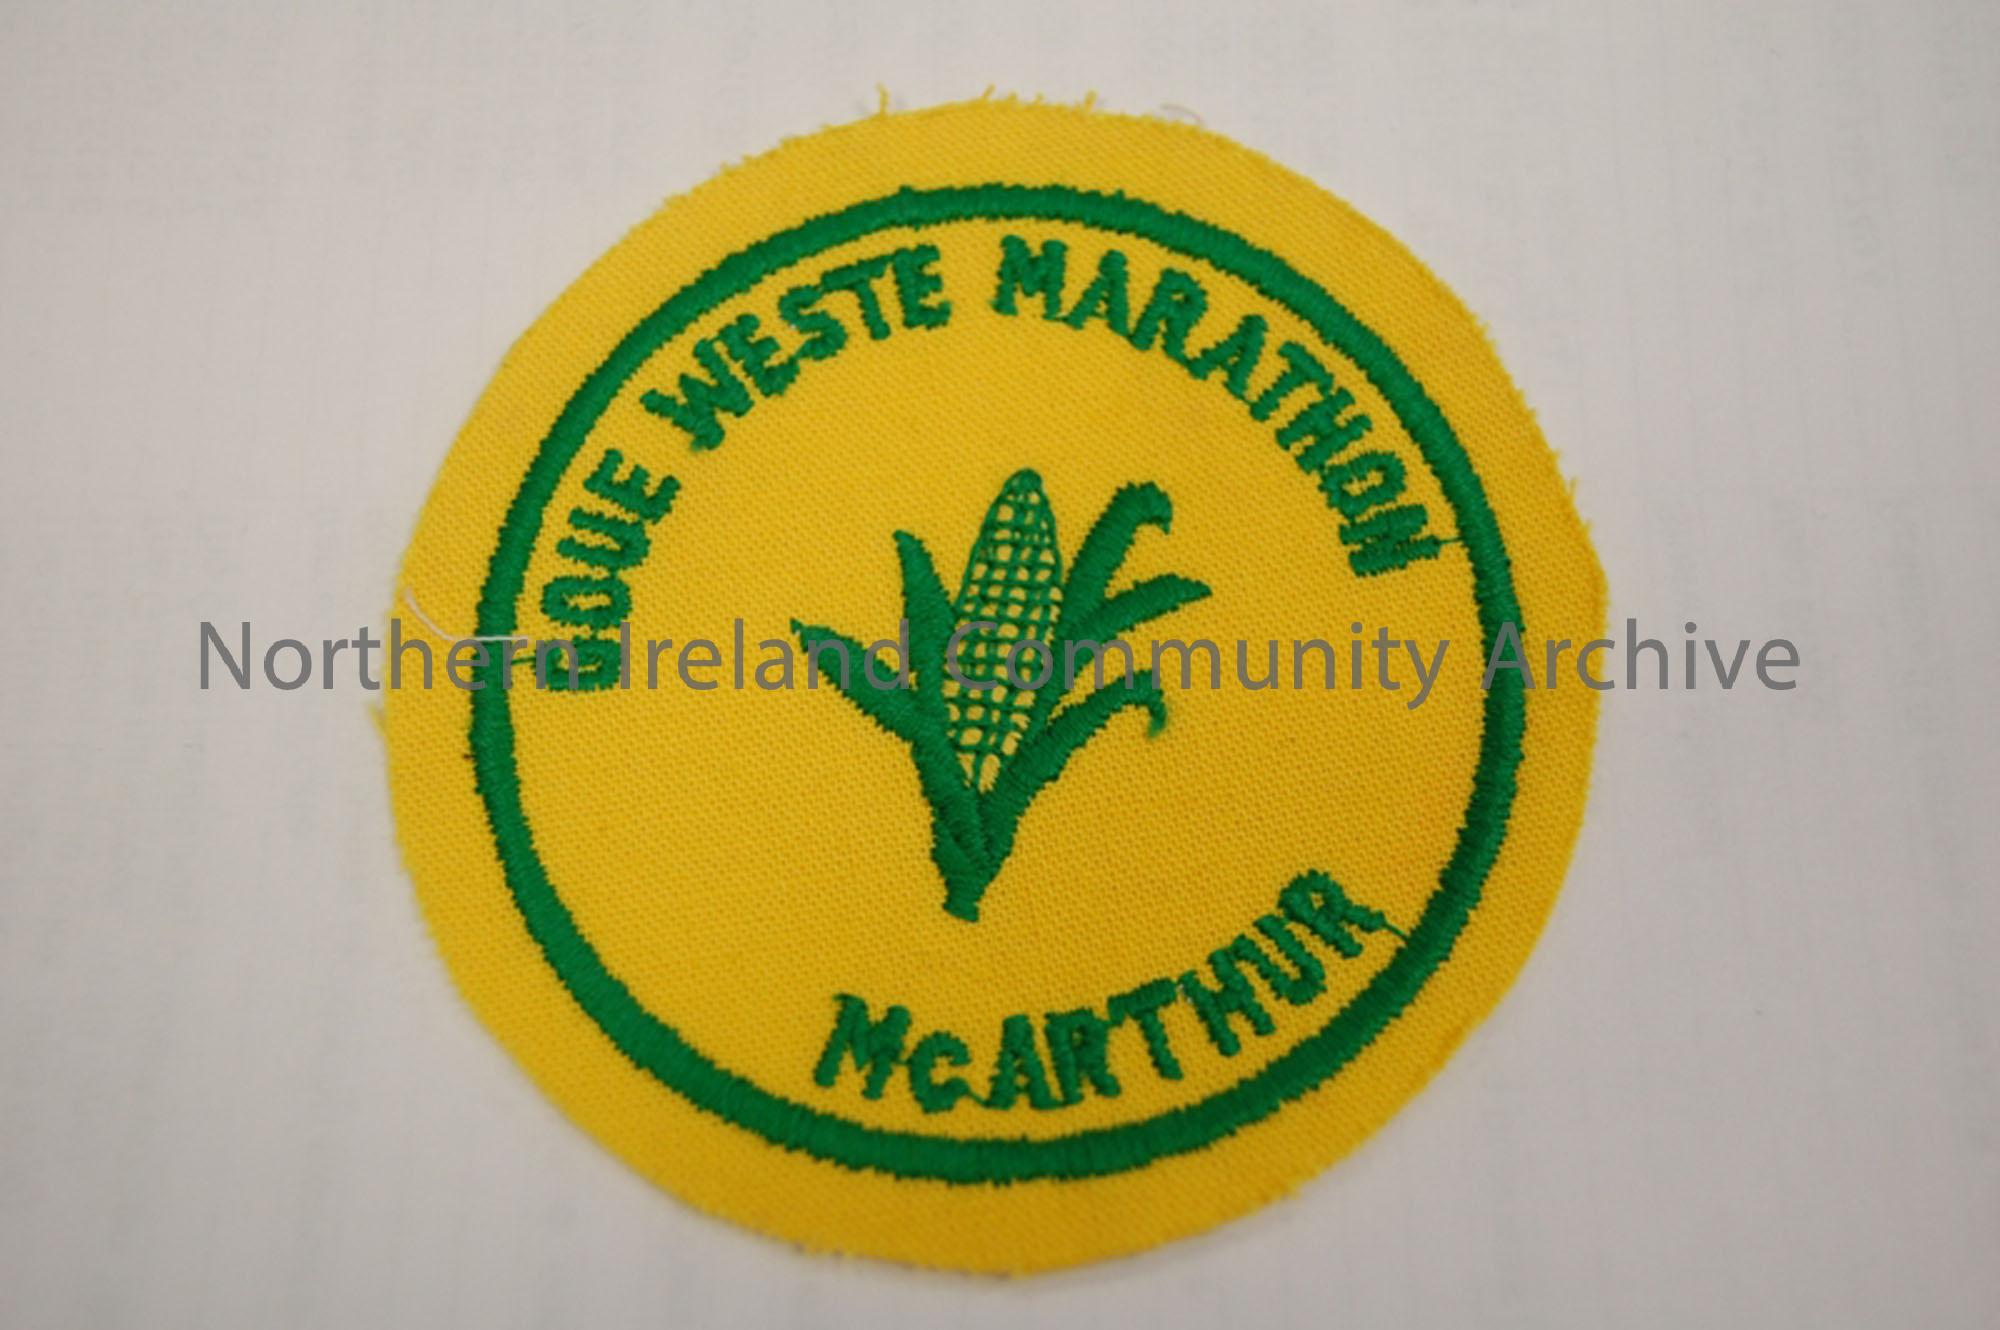 McArthur Goue Weste Marathon fabric patch